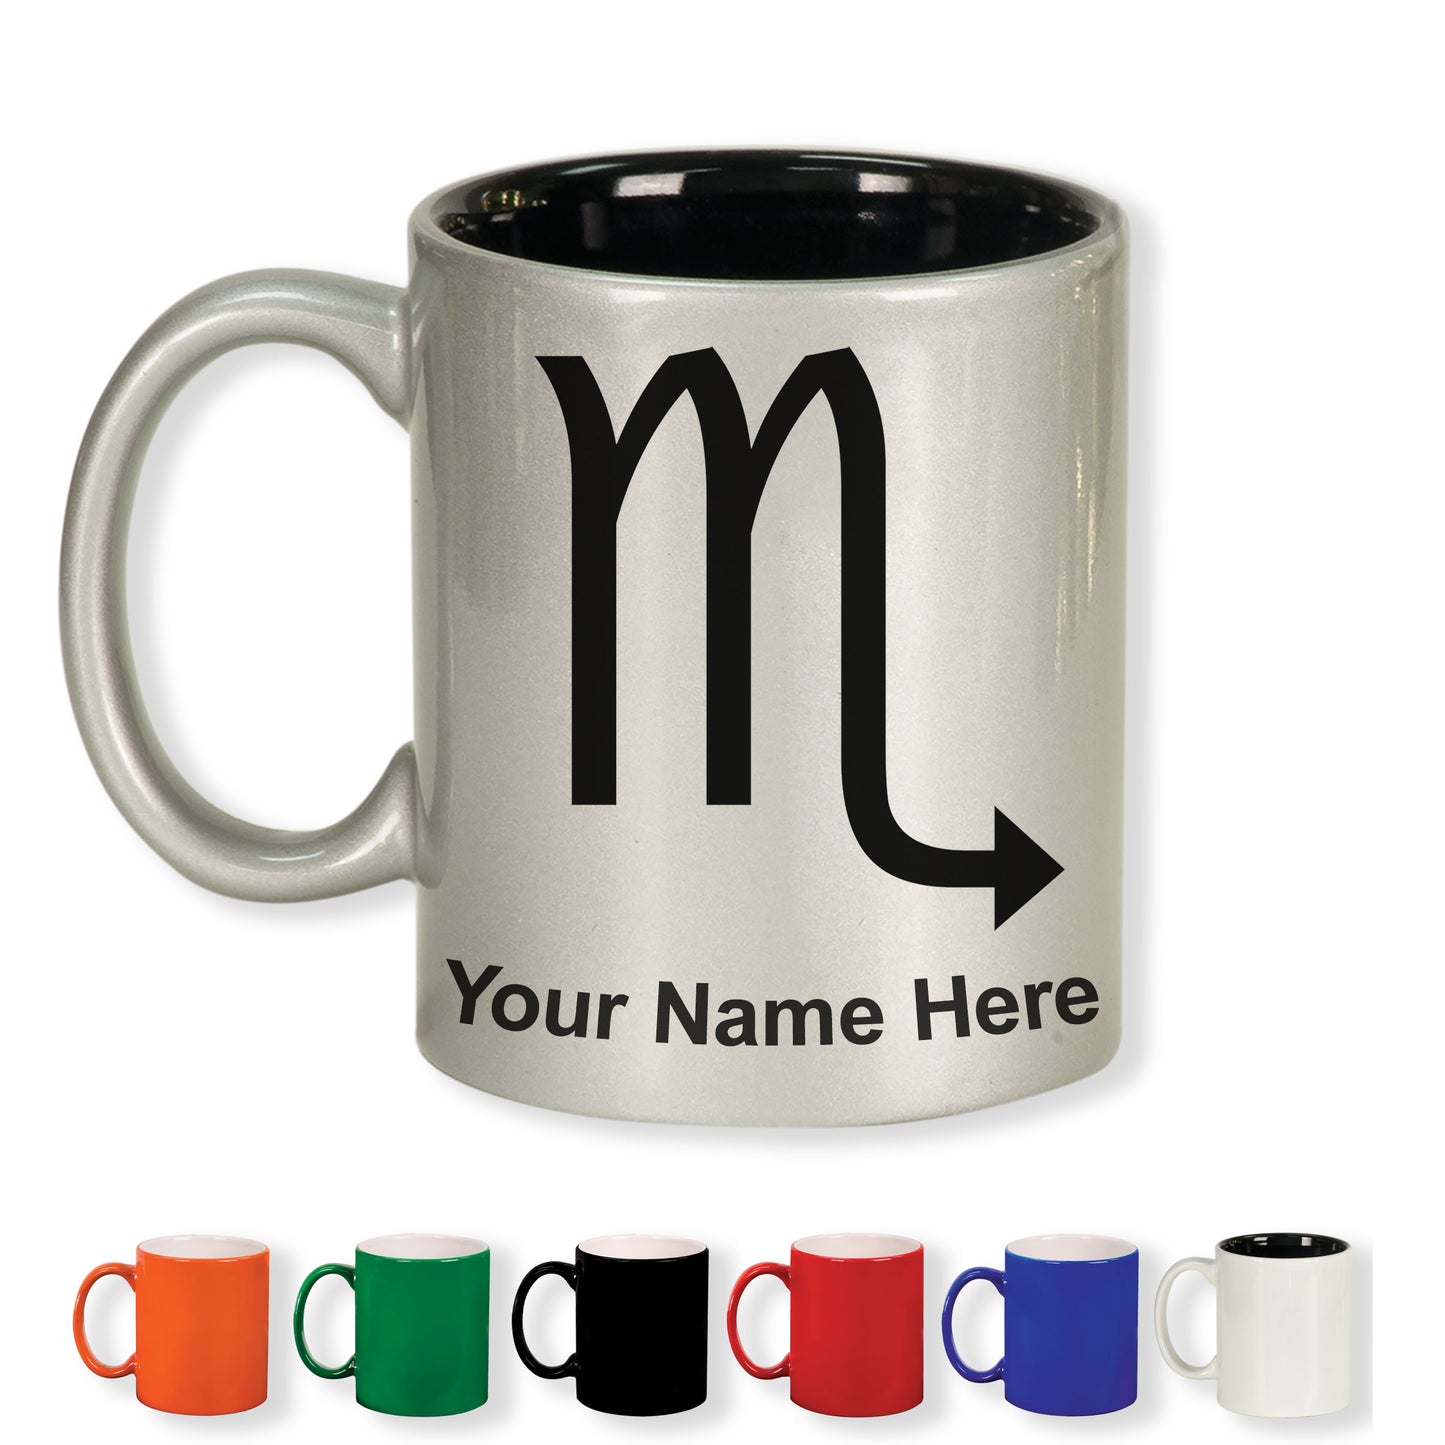 11oz Round Ceramic Coffee Mug, Zodiac Sign Scorpio, Personalized Engraving Included